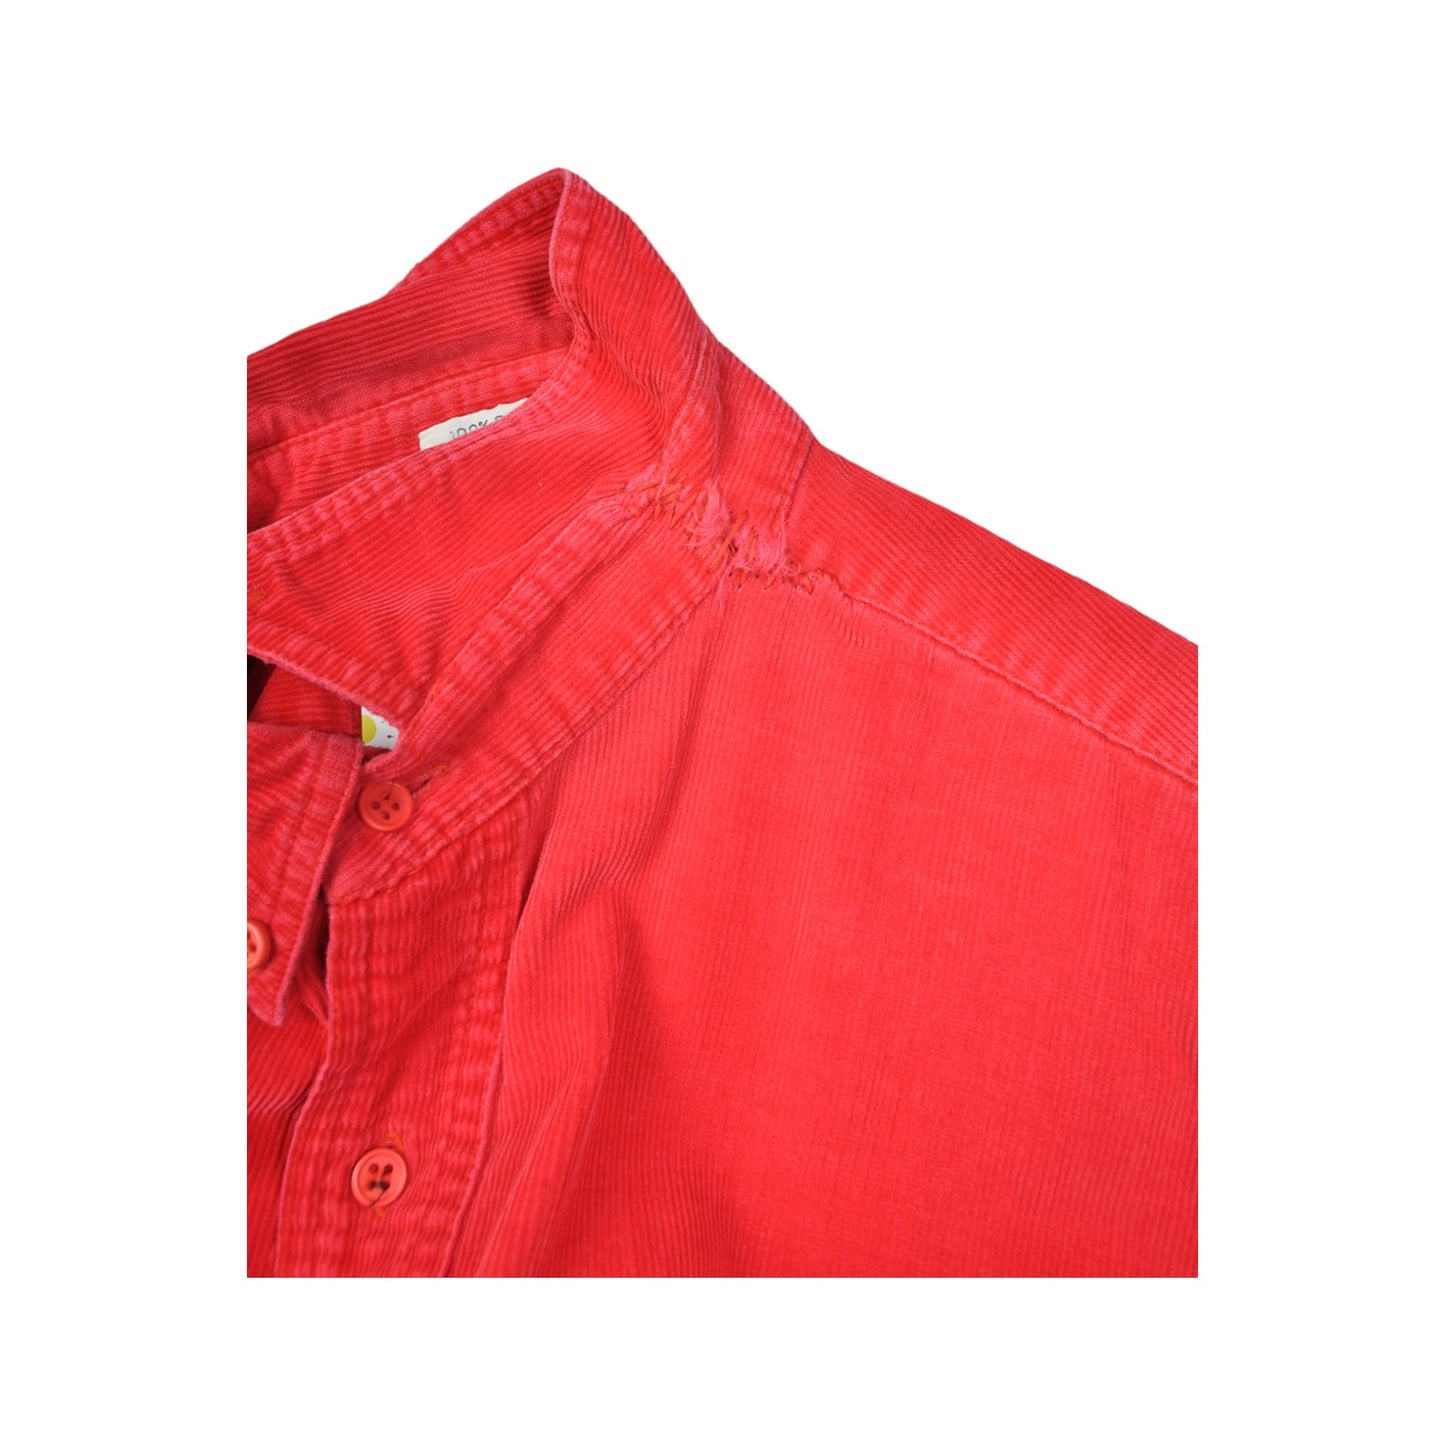 Vintage Corduroy Shirt Short Sleeve Red Medium